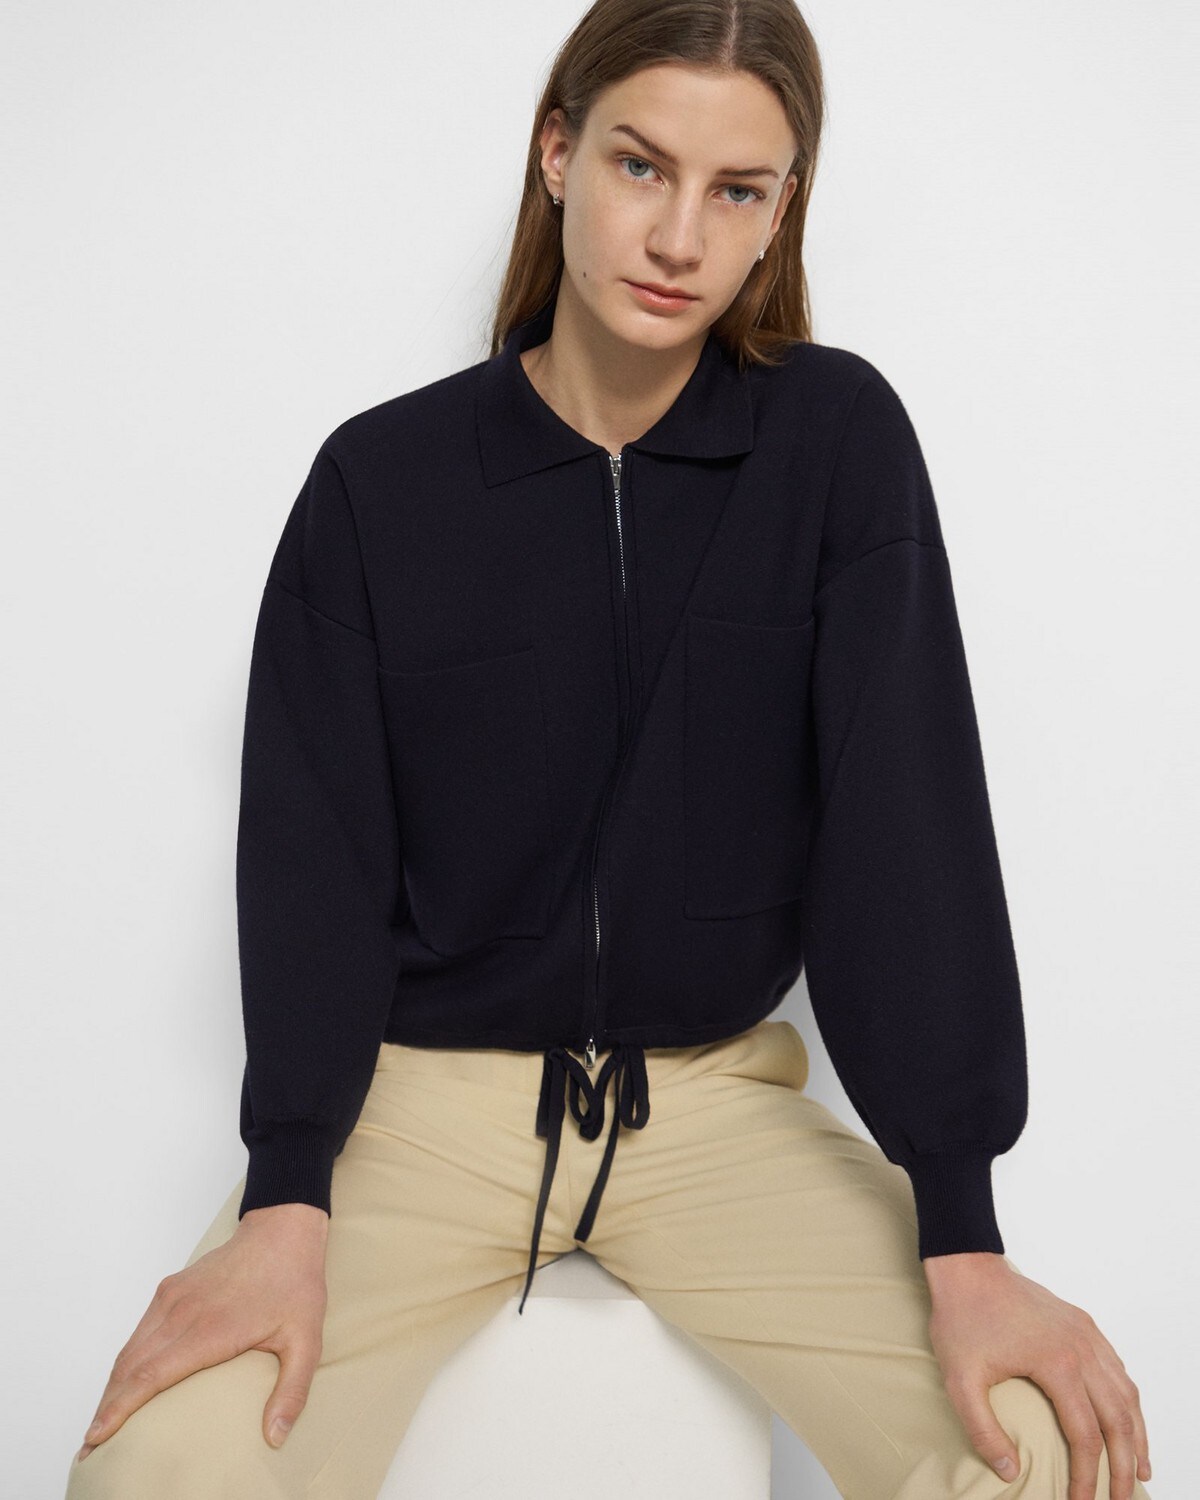 Cropped Zip Jacket in Empire Wool